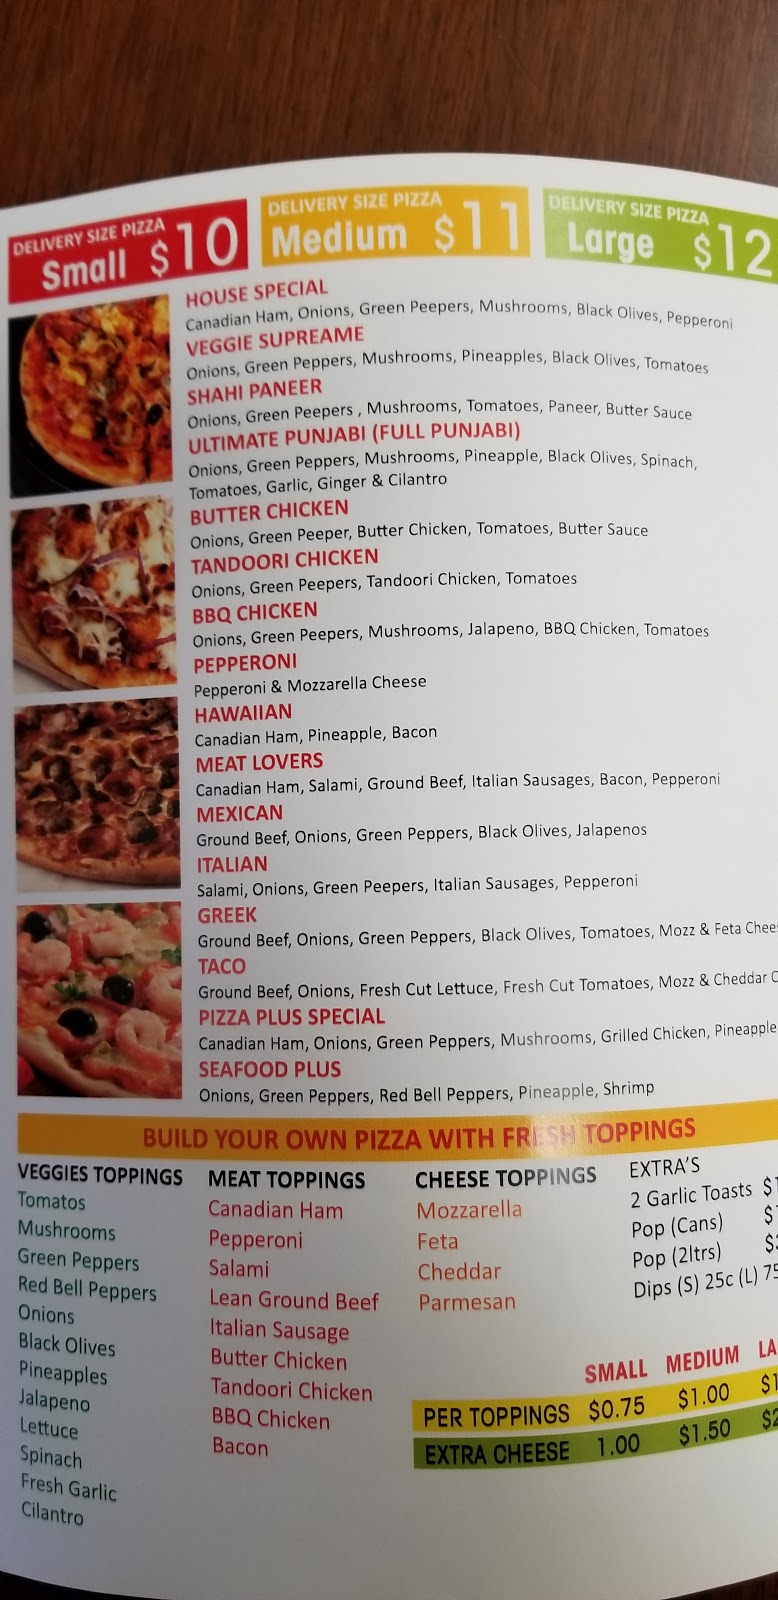 Pizza Plus 96 | 12050 96 Ave, Surrey, BC V3V 1W3, Canada | Phone: (604) 587-4992